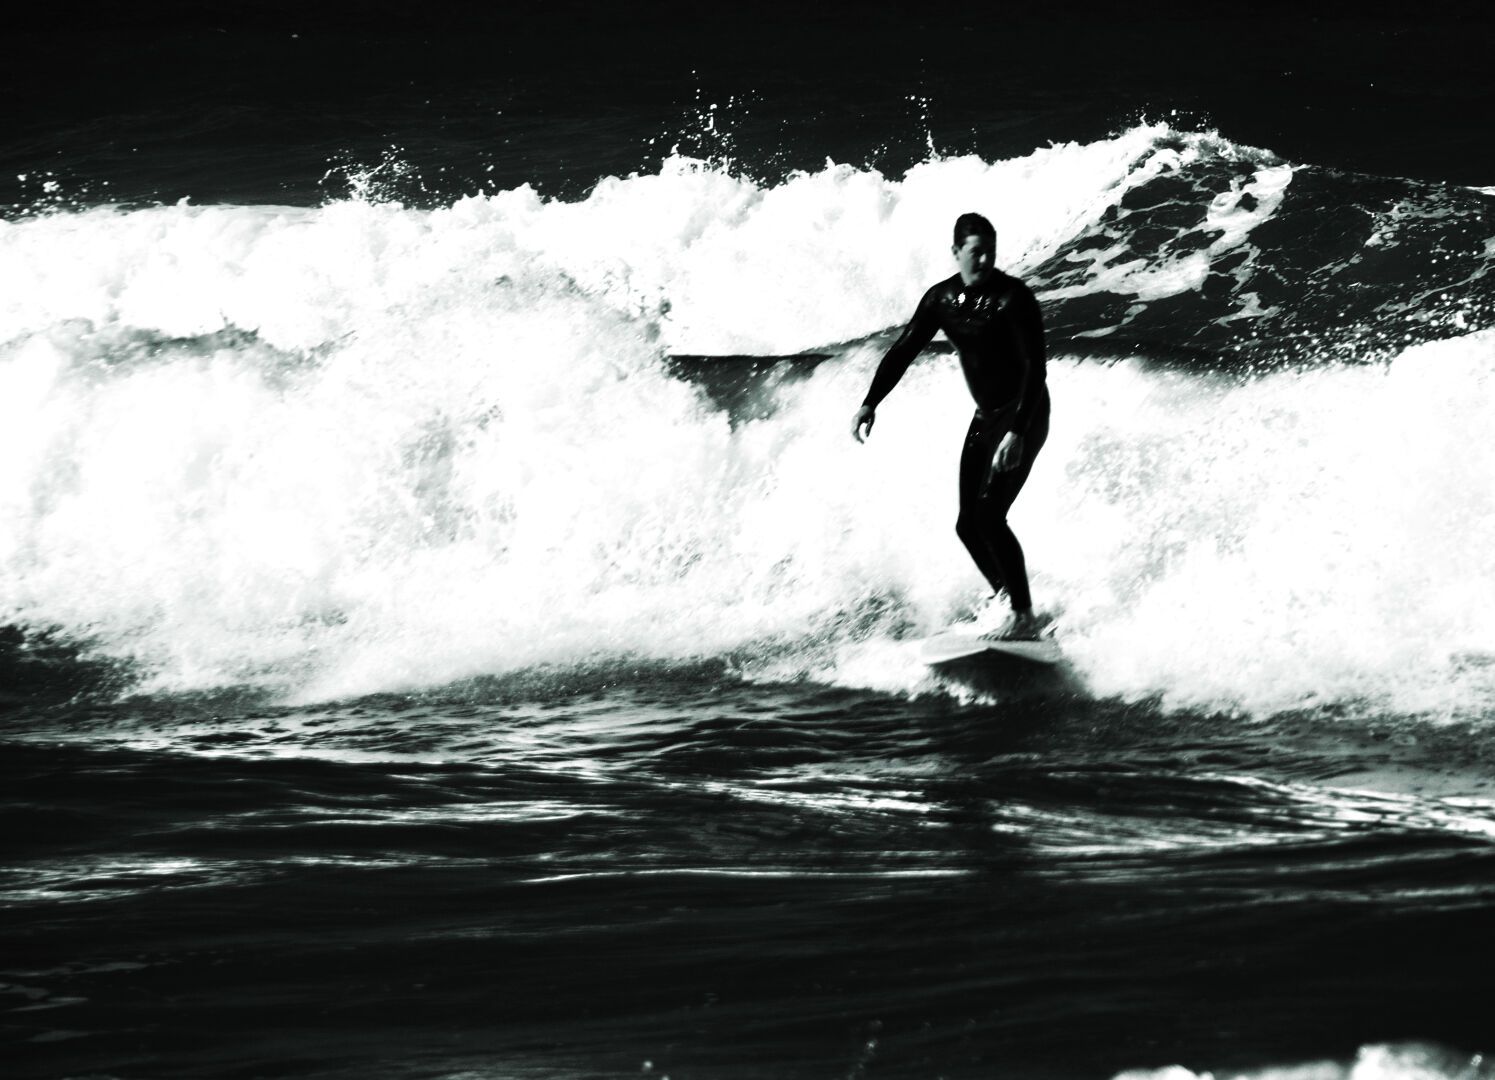 Surfing the waves

#surfer #ocean #atlanticocean #blackandwhite #monochrome #highcontrast #blackandwhitephotography  #photography